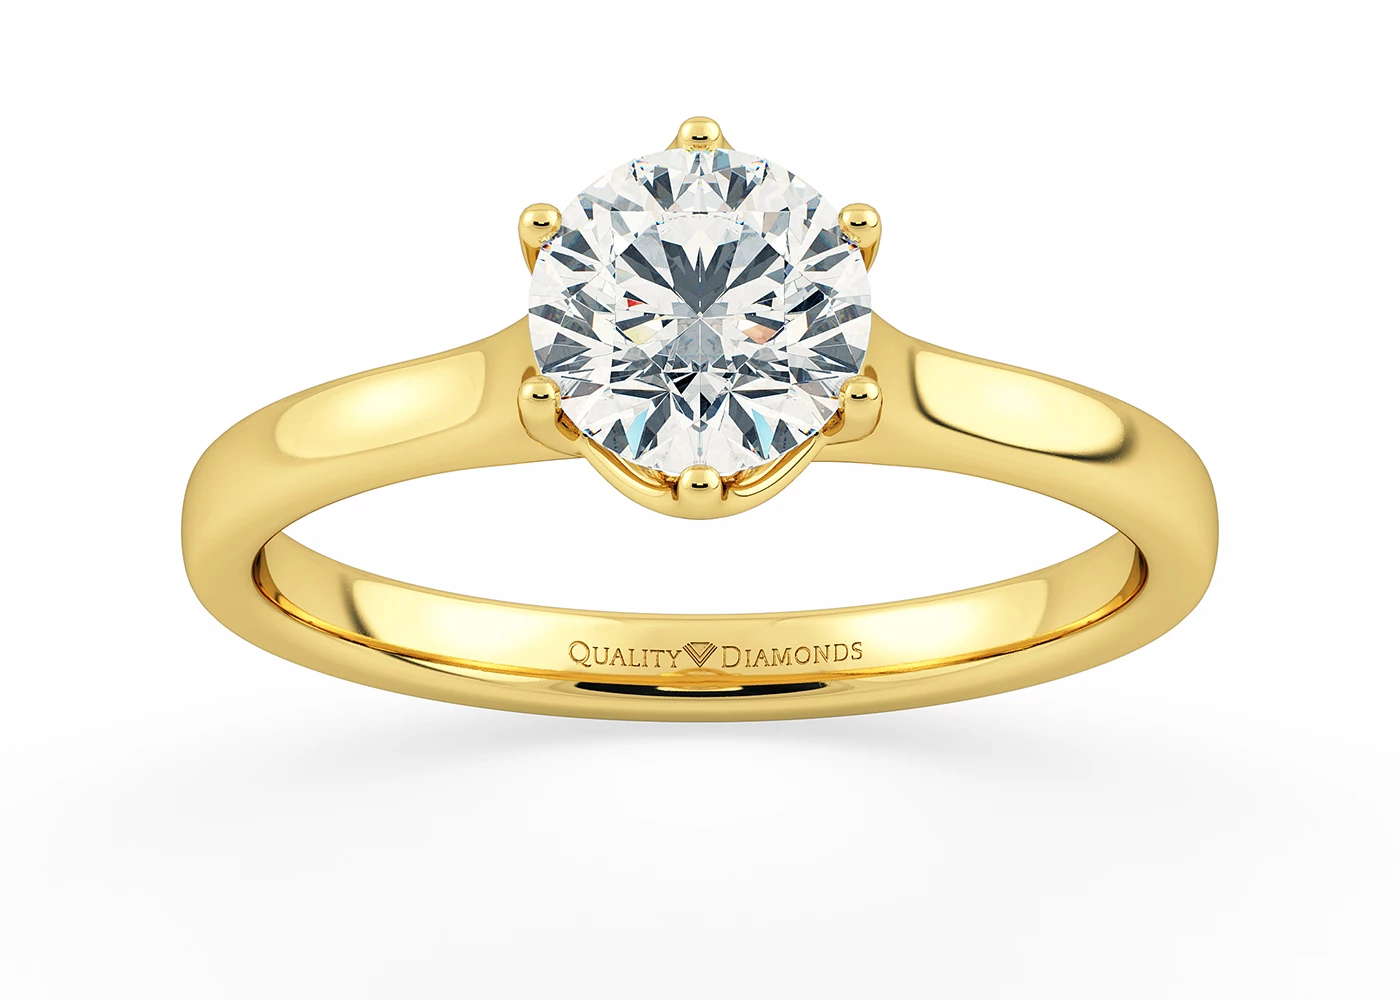 Six Claw Round Brilliant Promessa Diamond Ring in 18K Yellow Gold